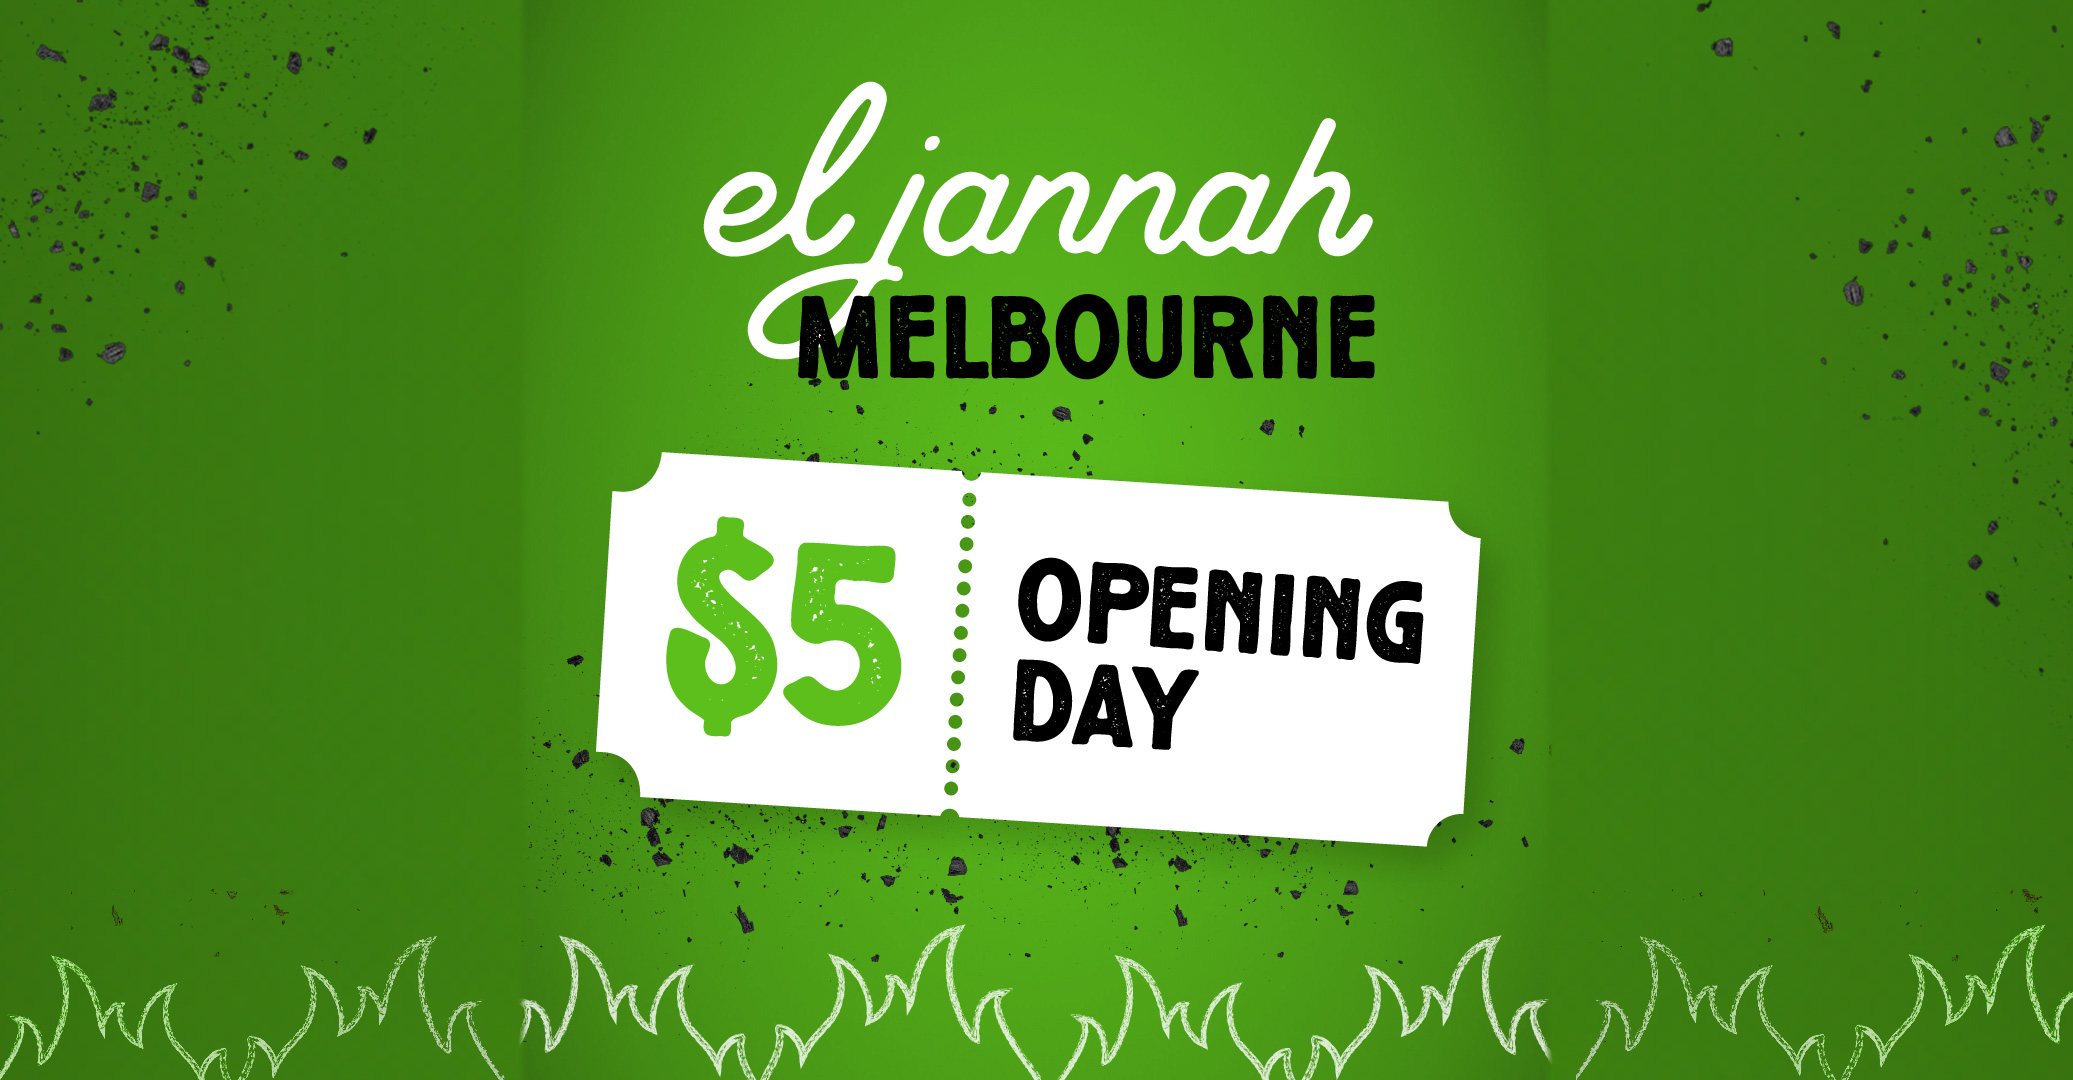 El Jannah Niddrie $5 Chicken Opening Day